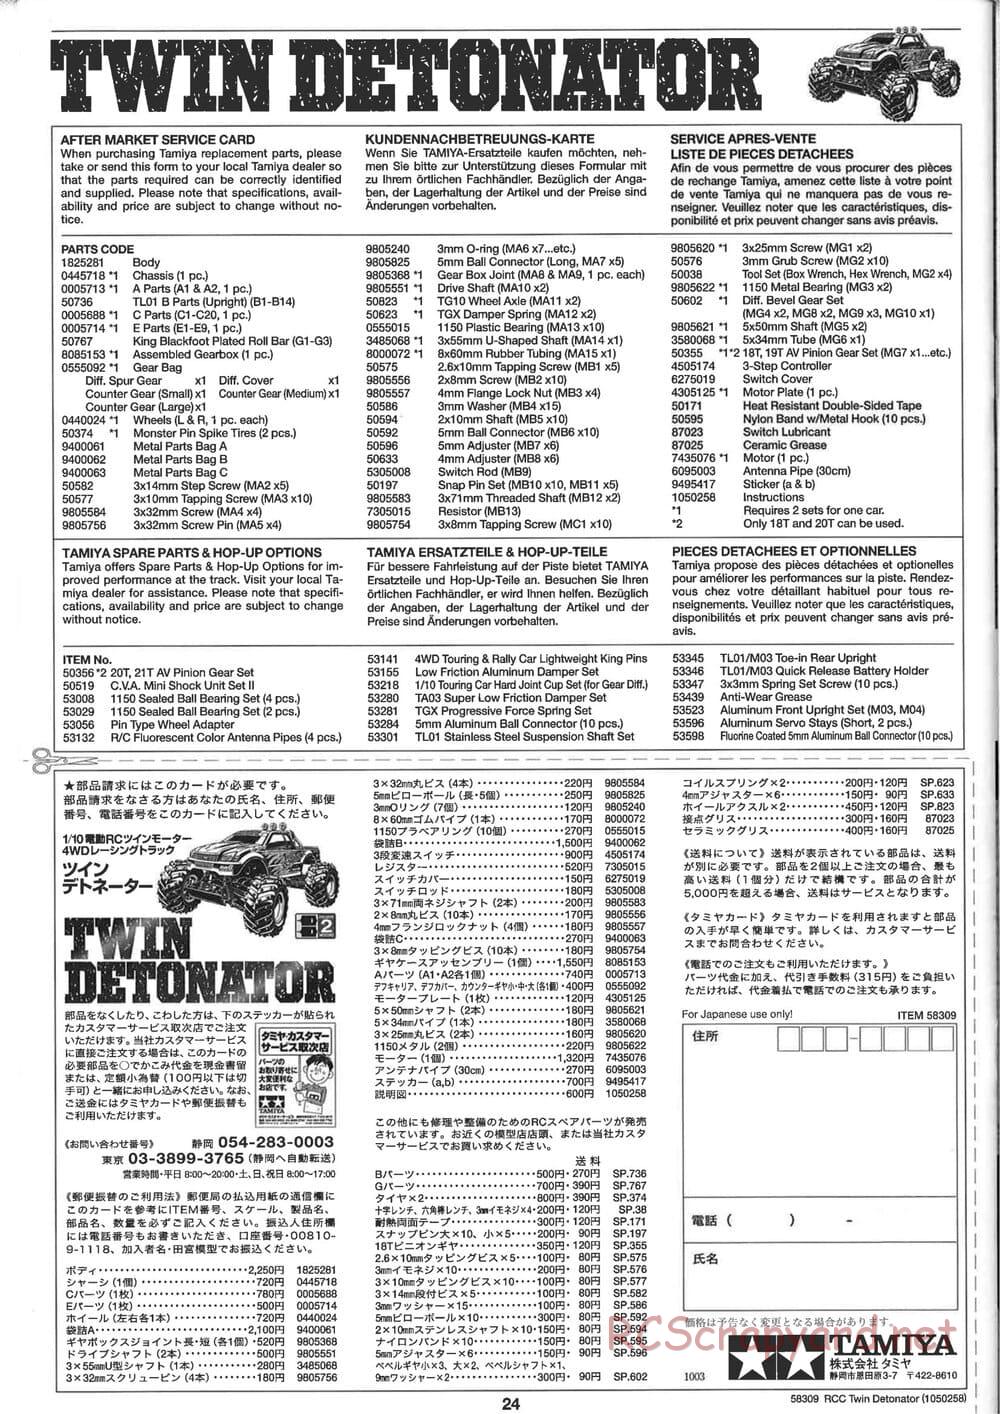 Tamiya - Twin Detonator - WR-01 Chassis - Manual - Page 24